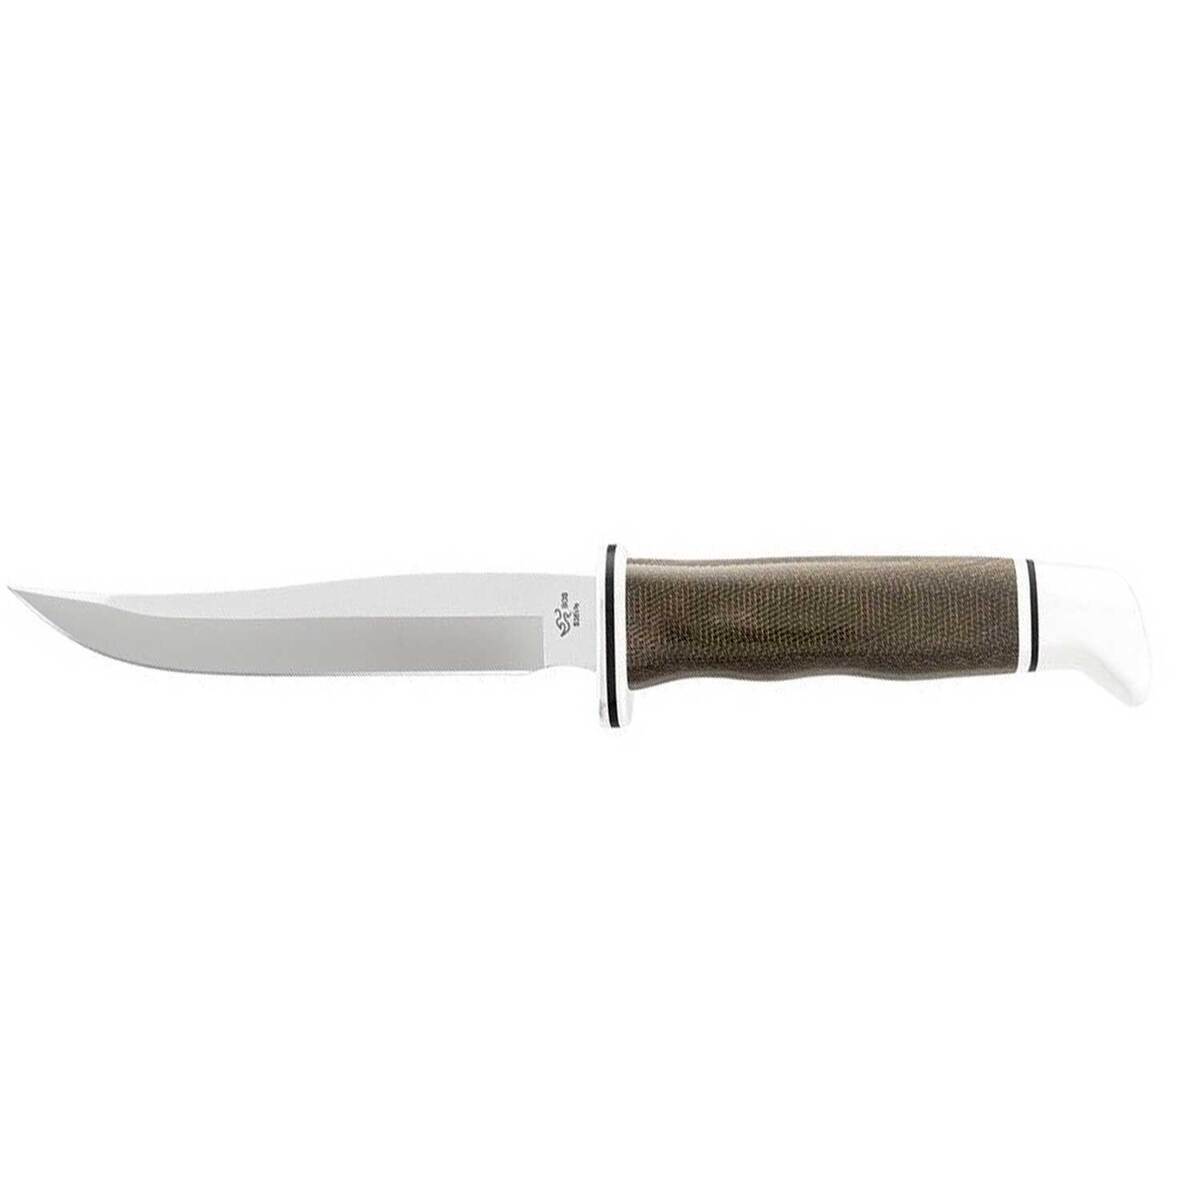 https://www.sportsmans.com/medias/buck-knives-105-pathfinder-pro-50-inch-fixed-blade-knife-green-canvas-micarta-1707504-1.jpg?context=bWFzdGVyfGltYWdlc3wyNjkzOHxpbWFnZS9qcGVnfGhhYi9oYzUvMTAwNDIyNjk4NTk4NzAvMTcwNzUwNC0xX2Jhc2UtY29udmVyc2lvbkZvcm1hdF8xMjAwLWNvbnZlcnNpb25Gb3JtYXR8ZWI5MTFkYTA5ODEzMGZmYzgyYTg0MzY5Y2I1YWMxMDRmNTliNDhkYTVkZTBhMzJkNzIzNjYzMDFiNmVlNGVhOA